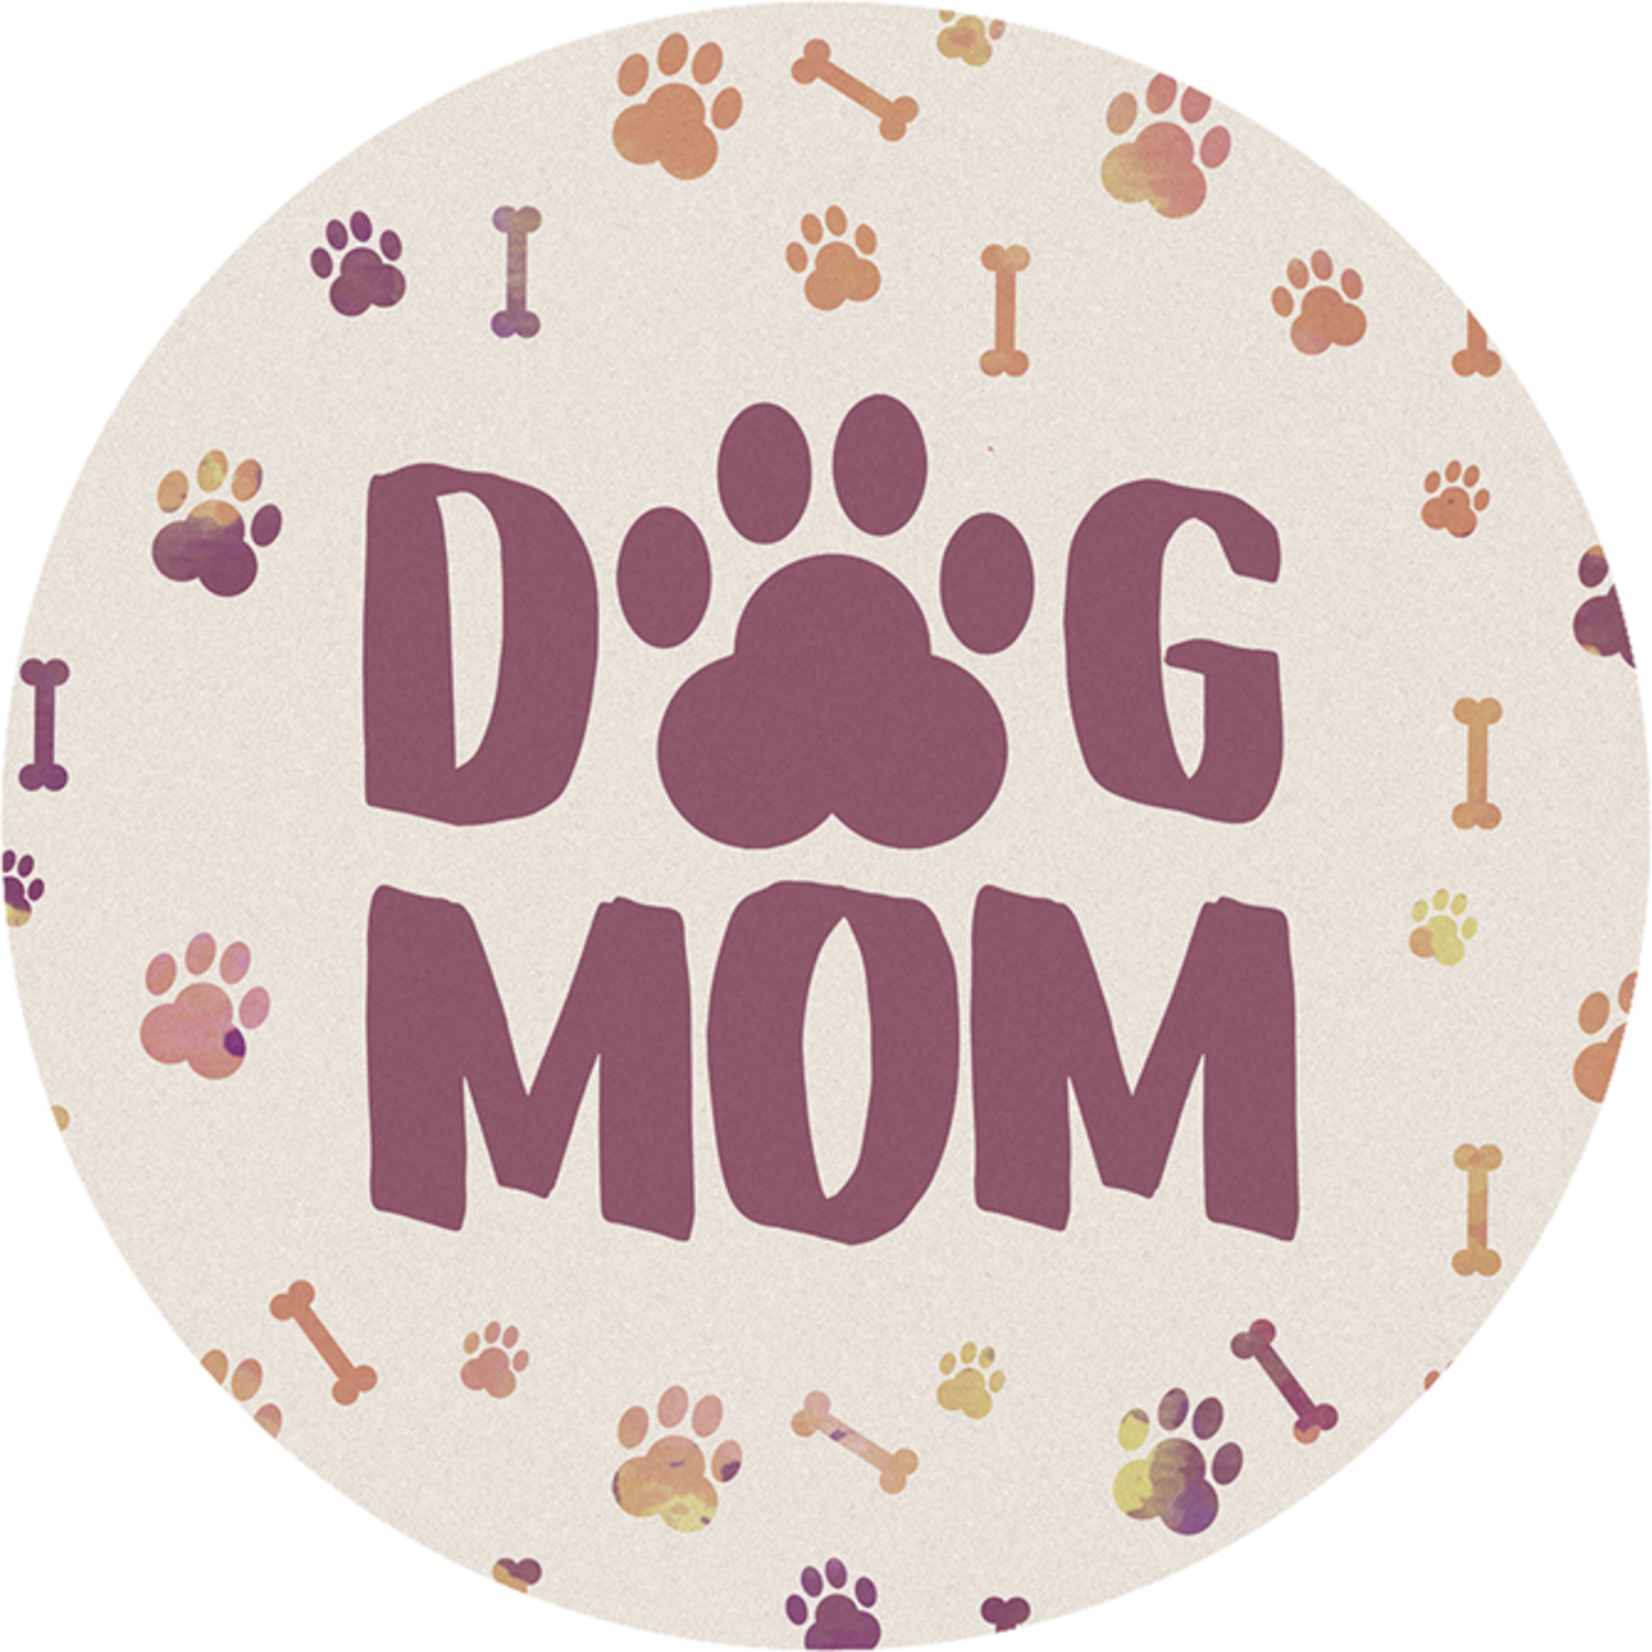 Carson Dog Mom Car Coaster